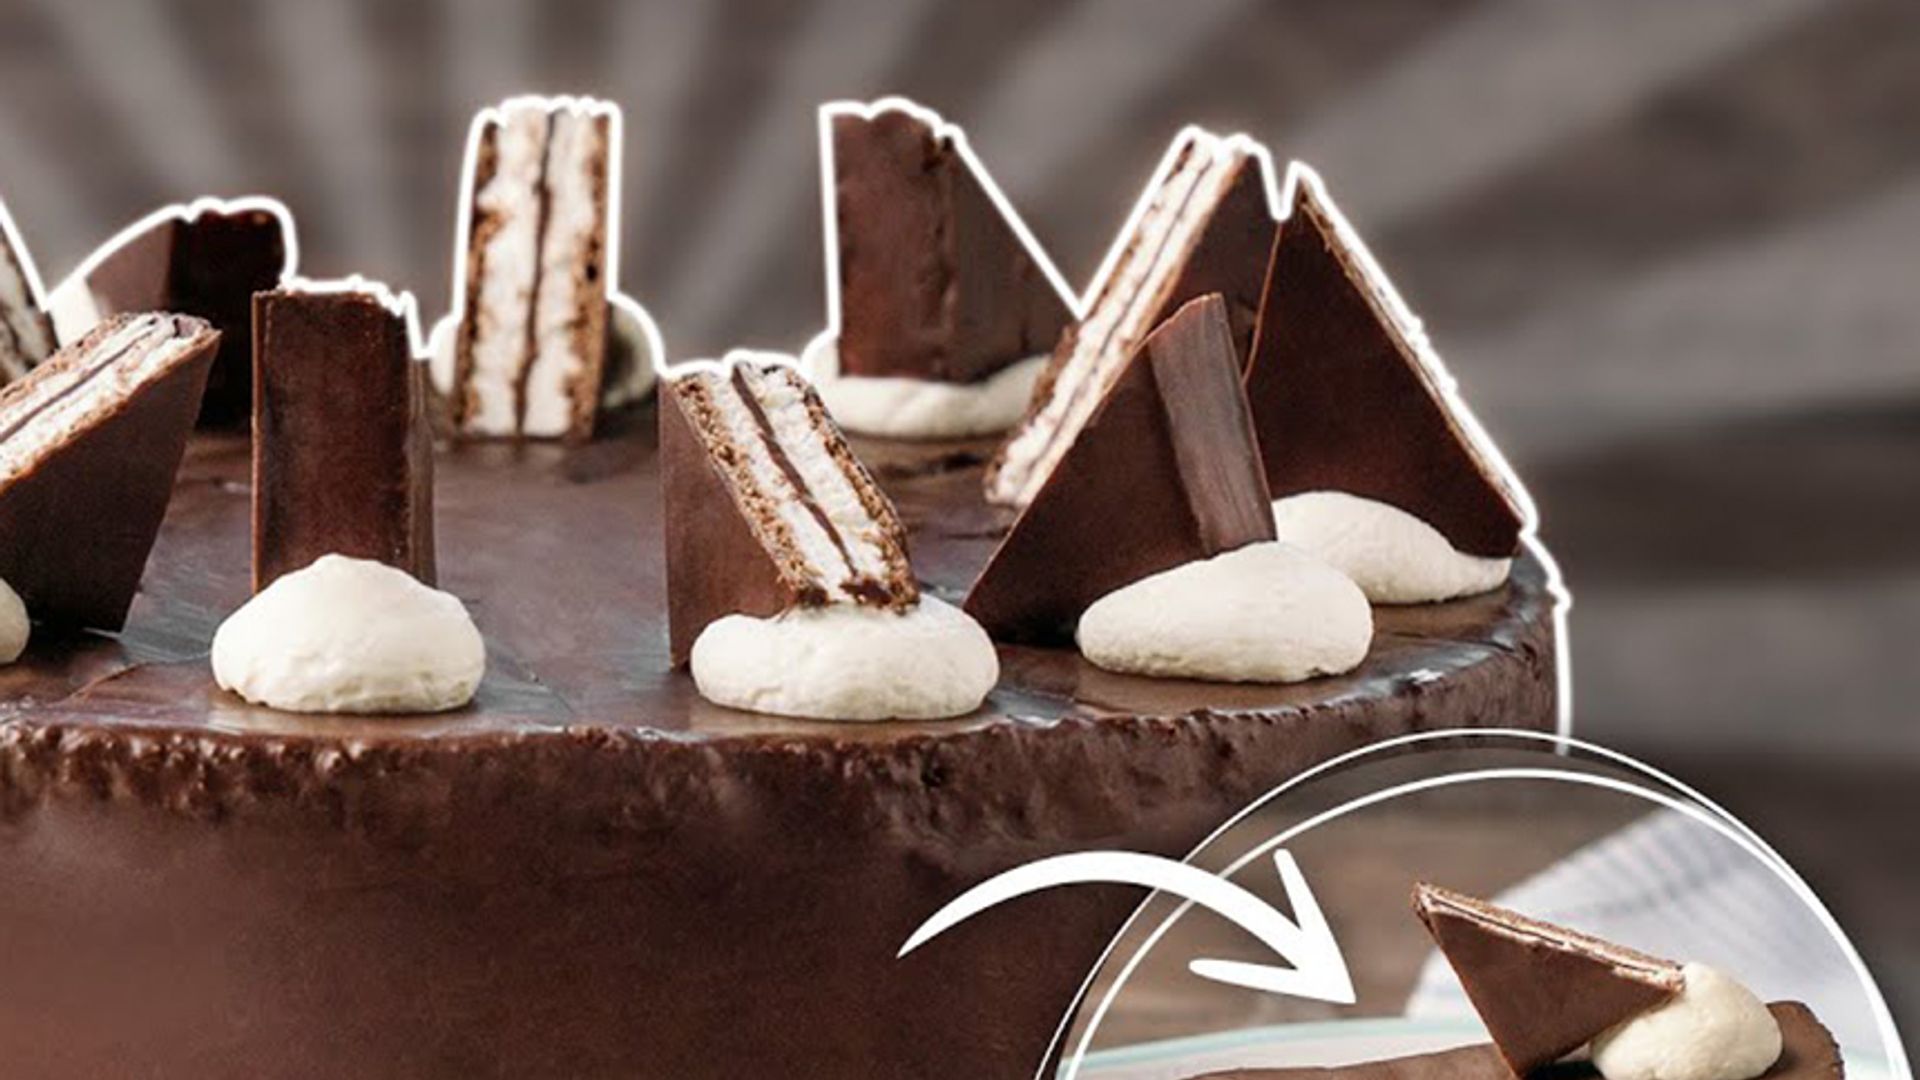 Kinder Pingui Torte / chocolate cake / Schokoladentorte mit Sahnecreme / Sallys Welt